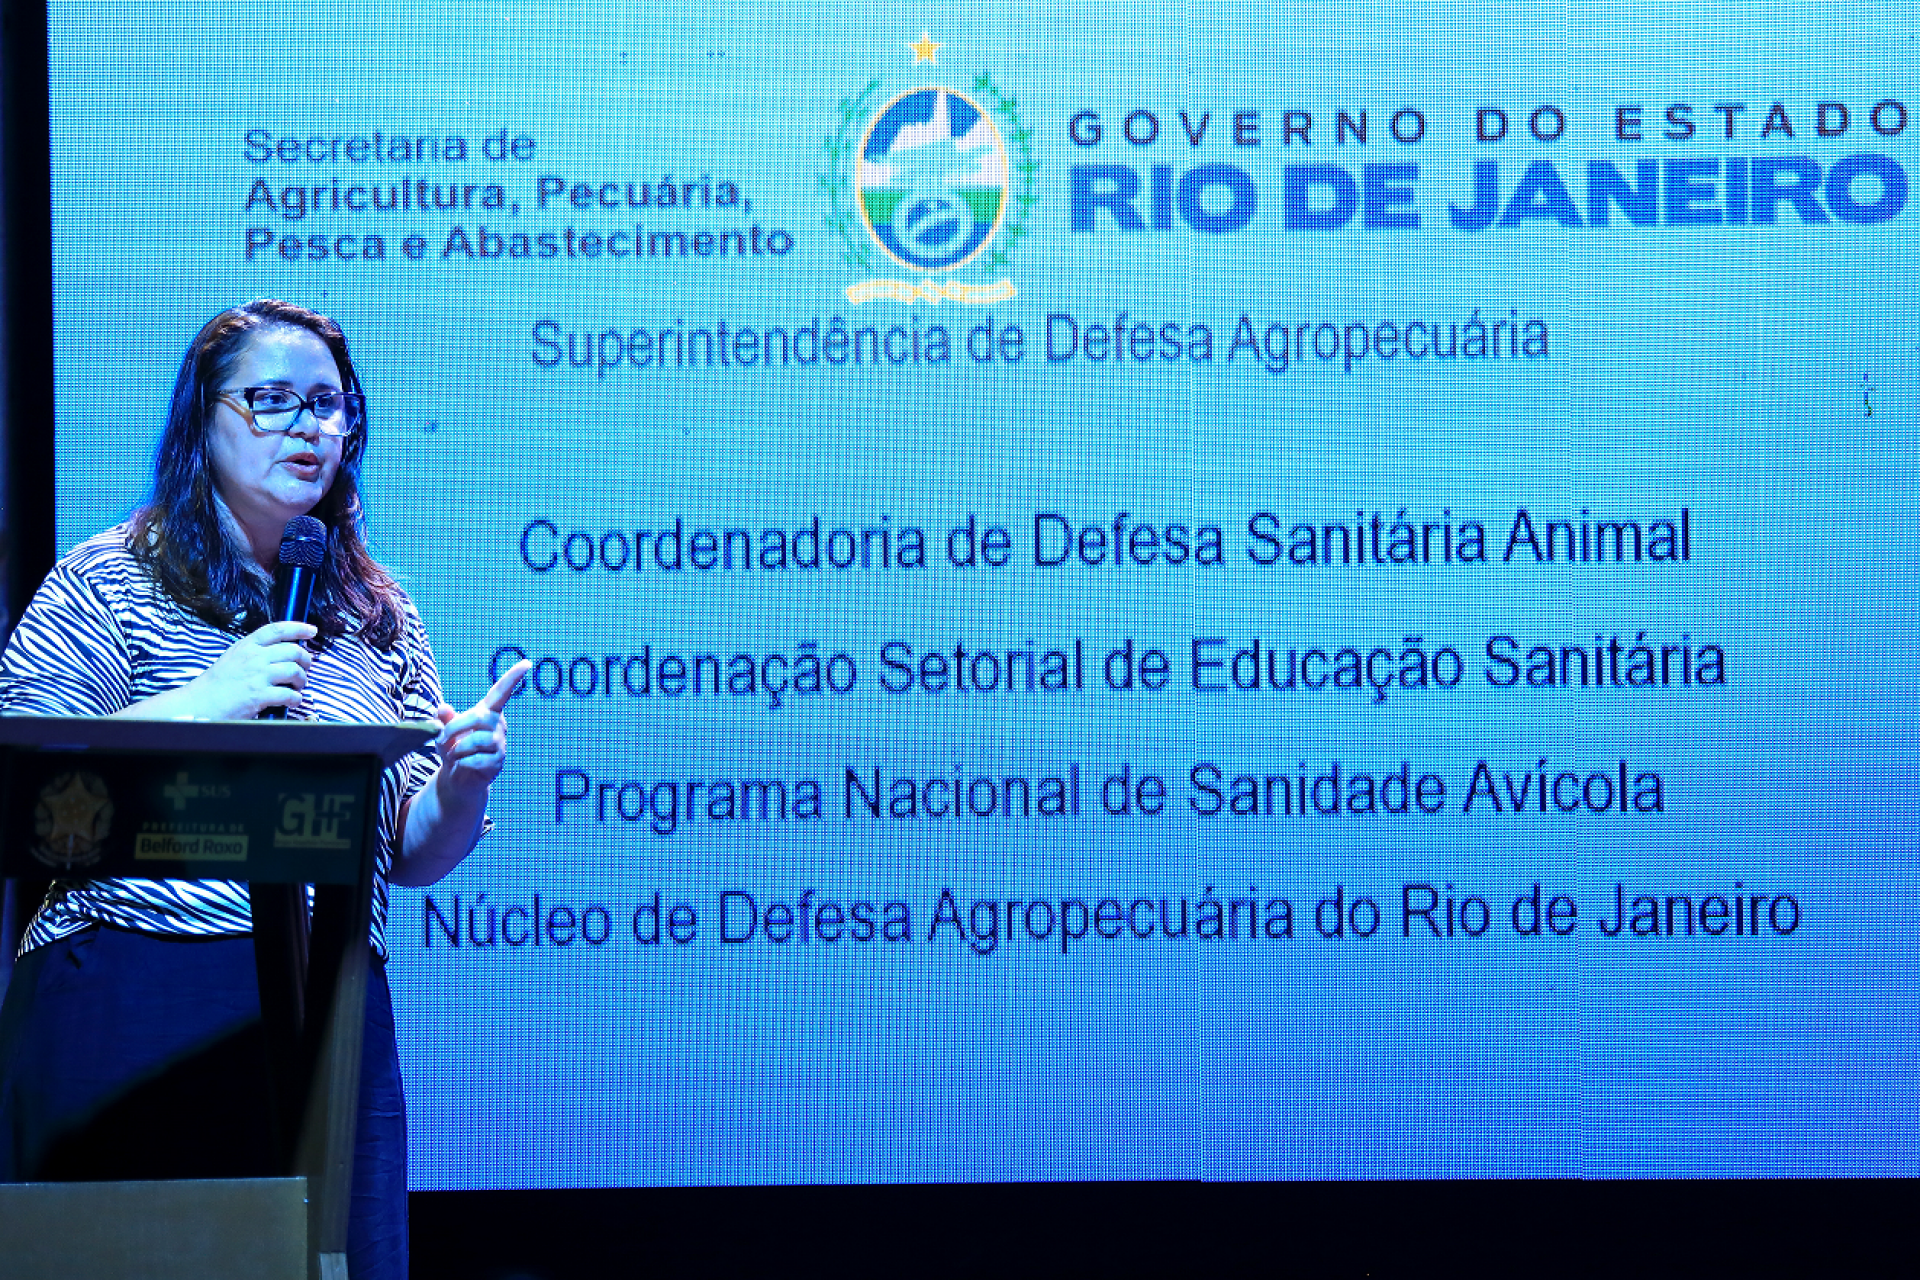 Lilia Aparecida Marques, a veterinarian representing the National Center for Agricultural Defense, gave a speech on this topic - Rafael Barreto / PMBR